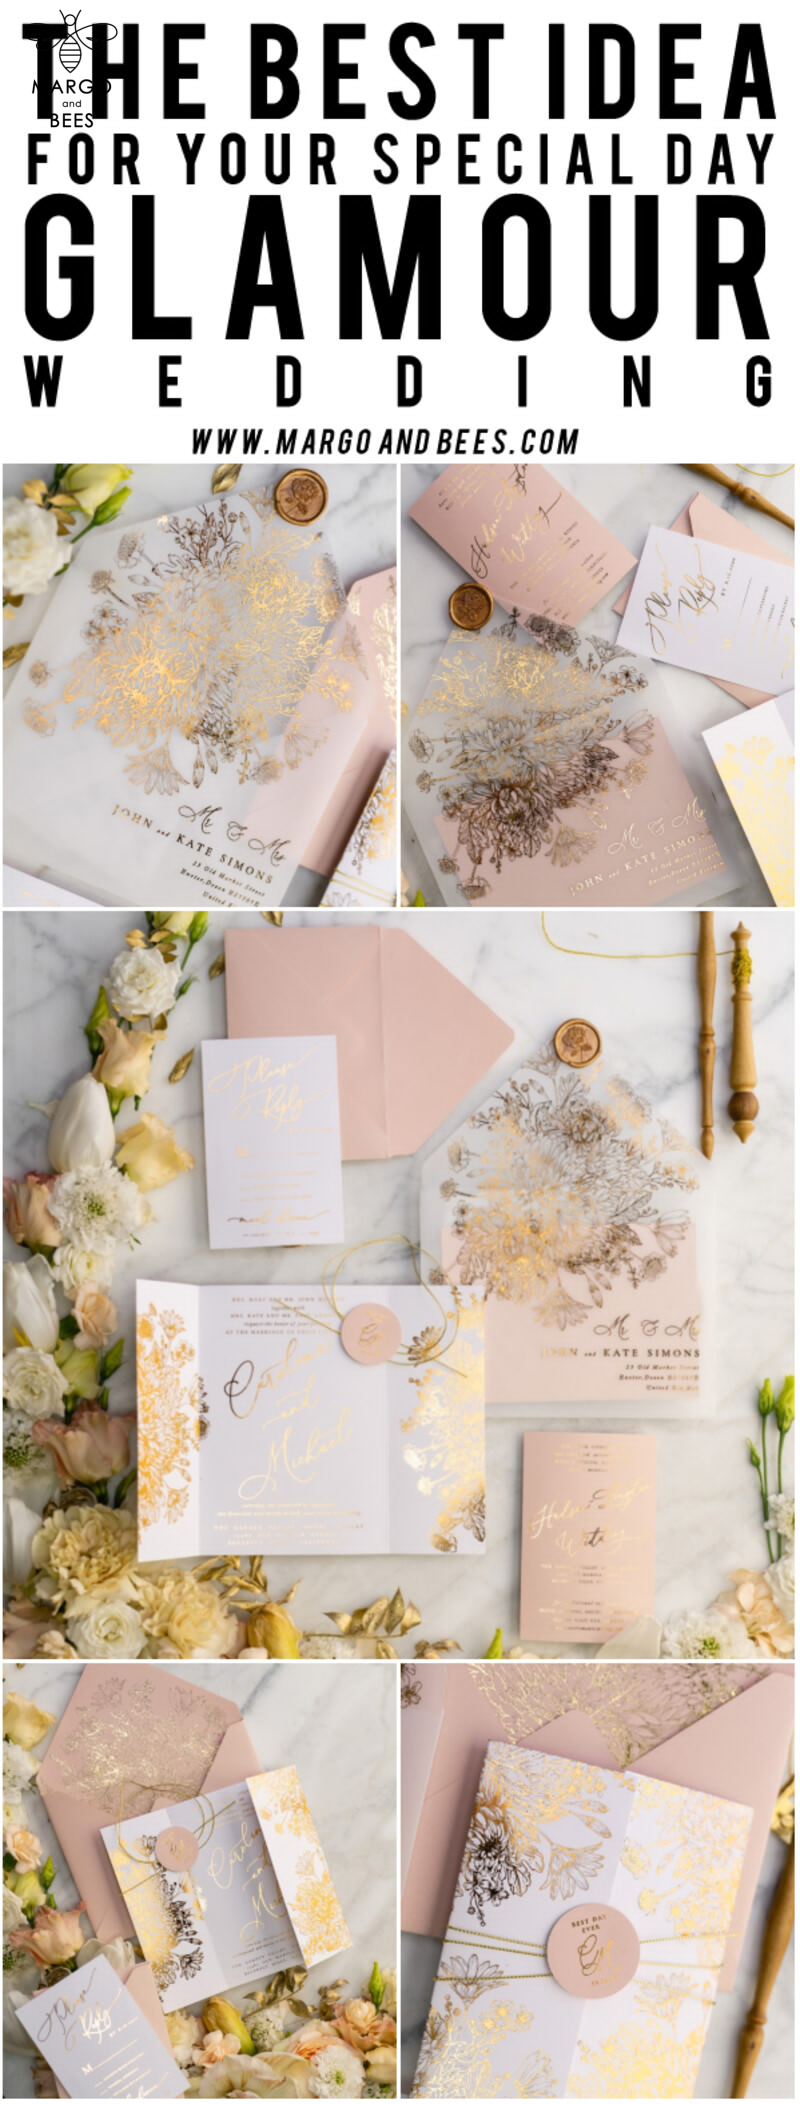 Luxury Arabic Golden Wedding Invitations, Glamour Gold Foil Wedding Invites, Romantic Blush Pink Wedding Cards, Bespoke Indian Wedding Stationery-42